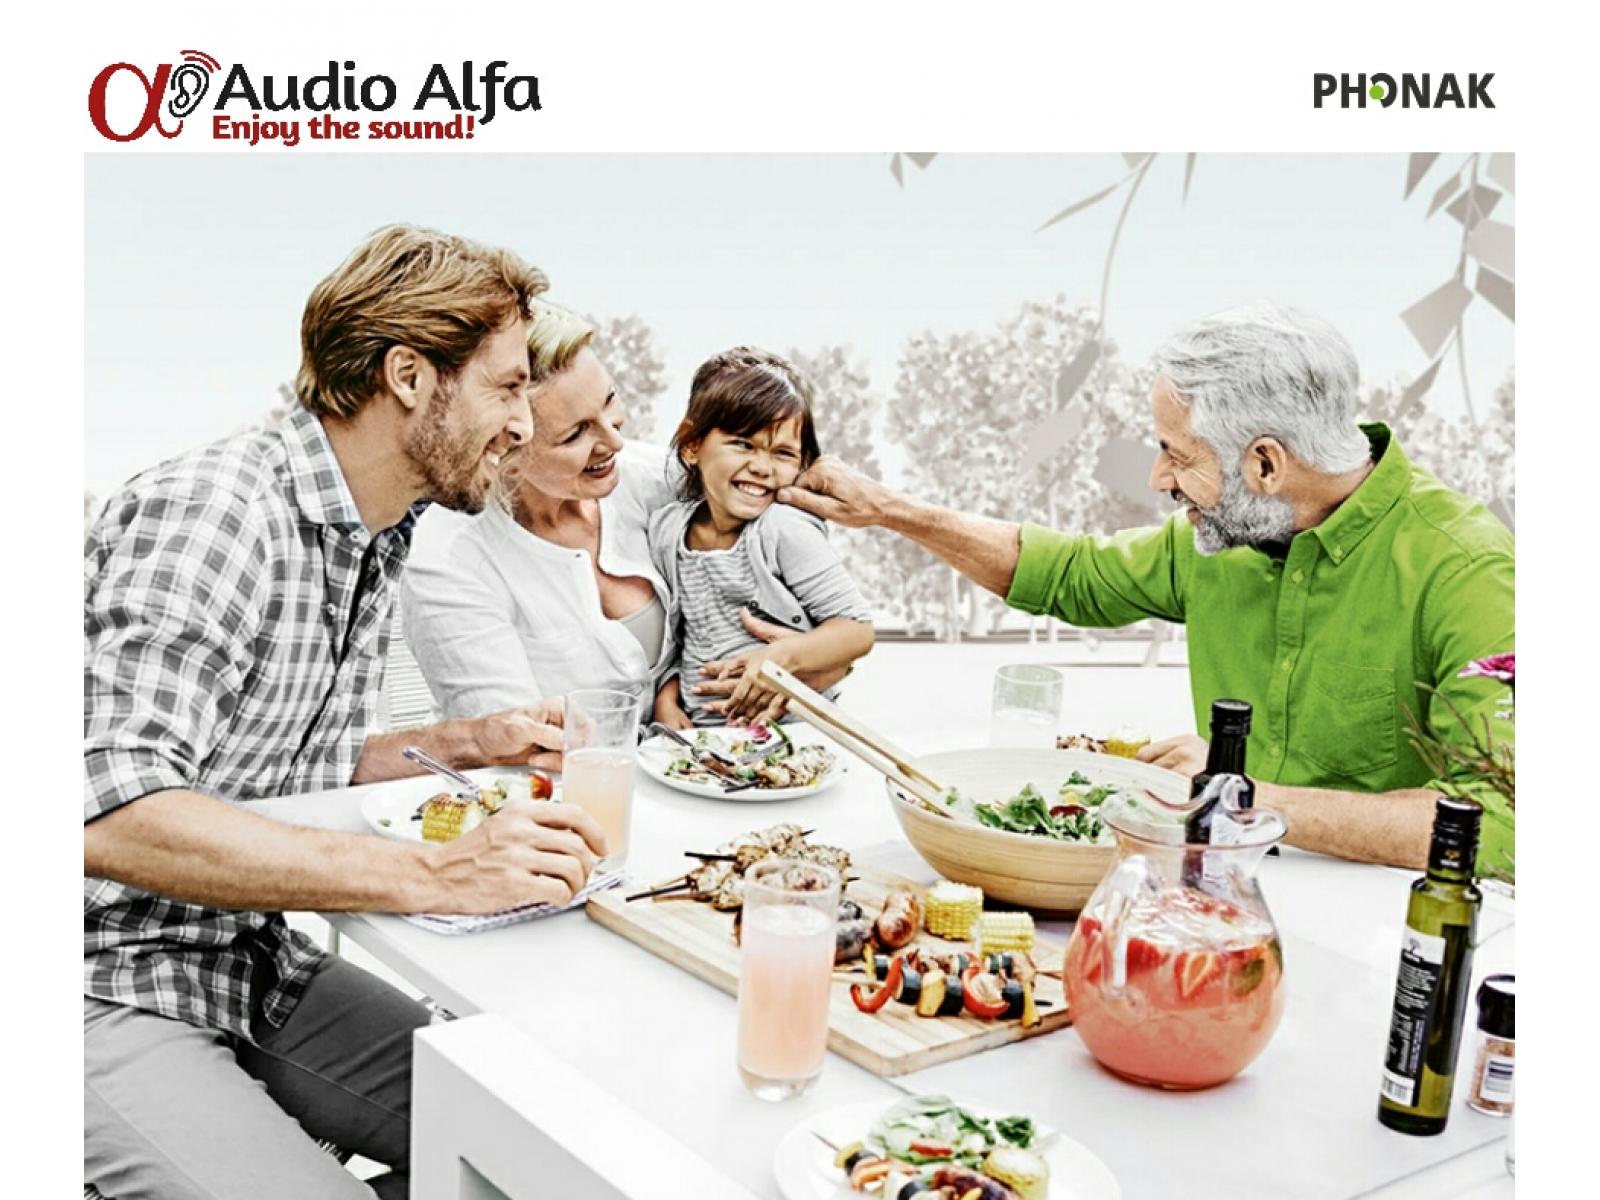 Aparate Auditive -Audio Alfa - aaa_phonak_promo19.jpg